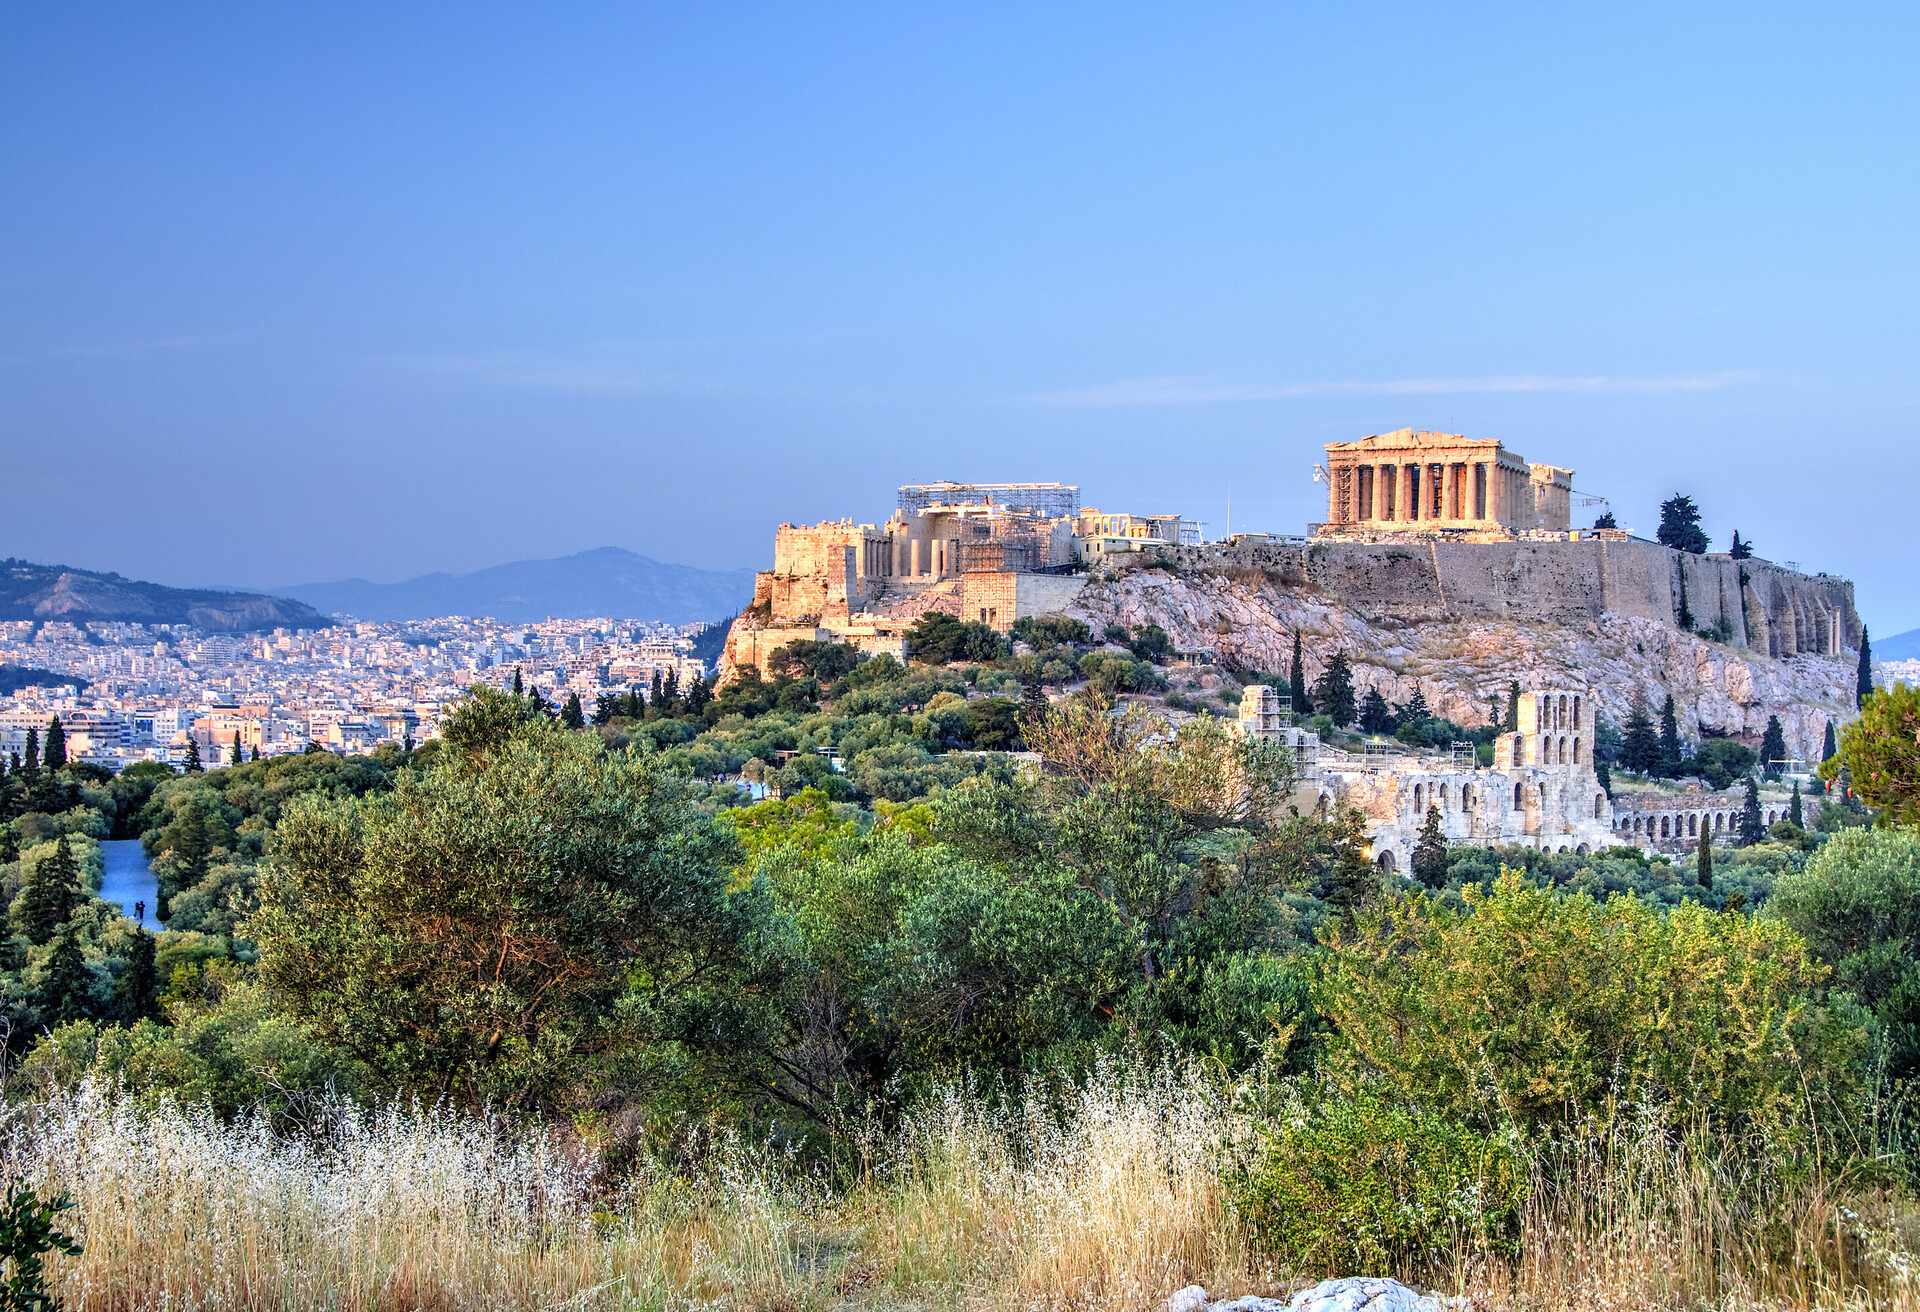 Acropolis seen from Filopapos Hill, Athens, Greece; Shutterstock ID 516035713; Purpose: CITY; Brand (KAYAK, Momondo, Any): KAYAK